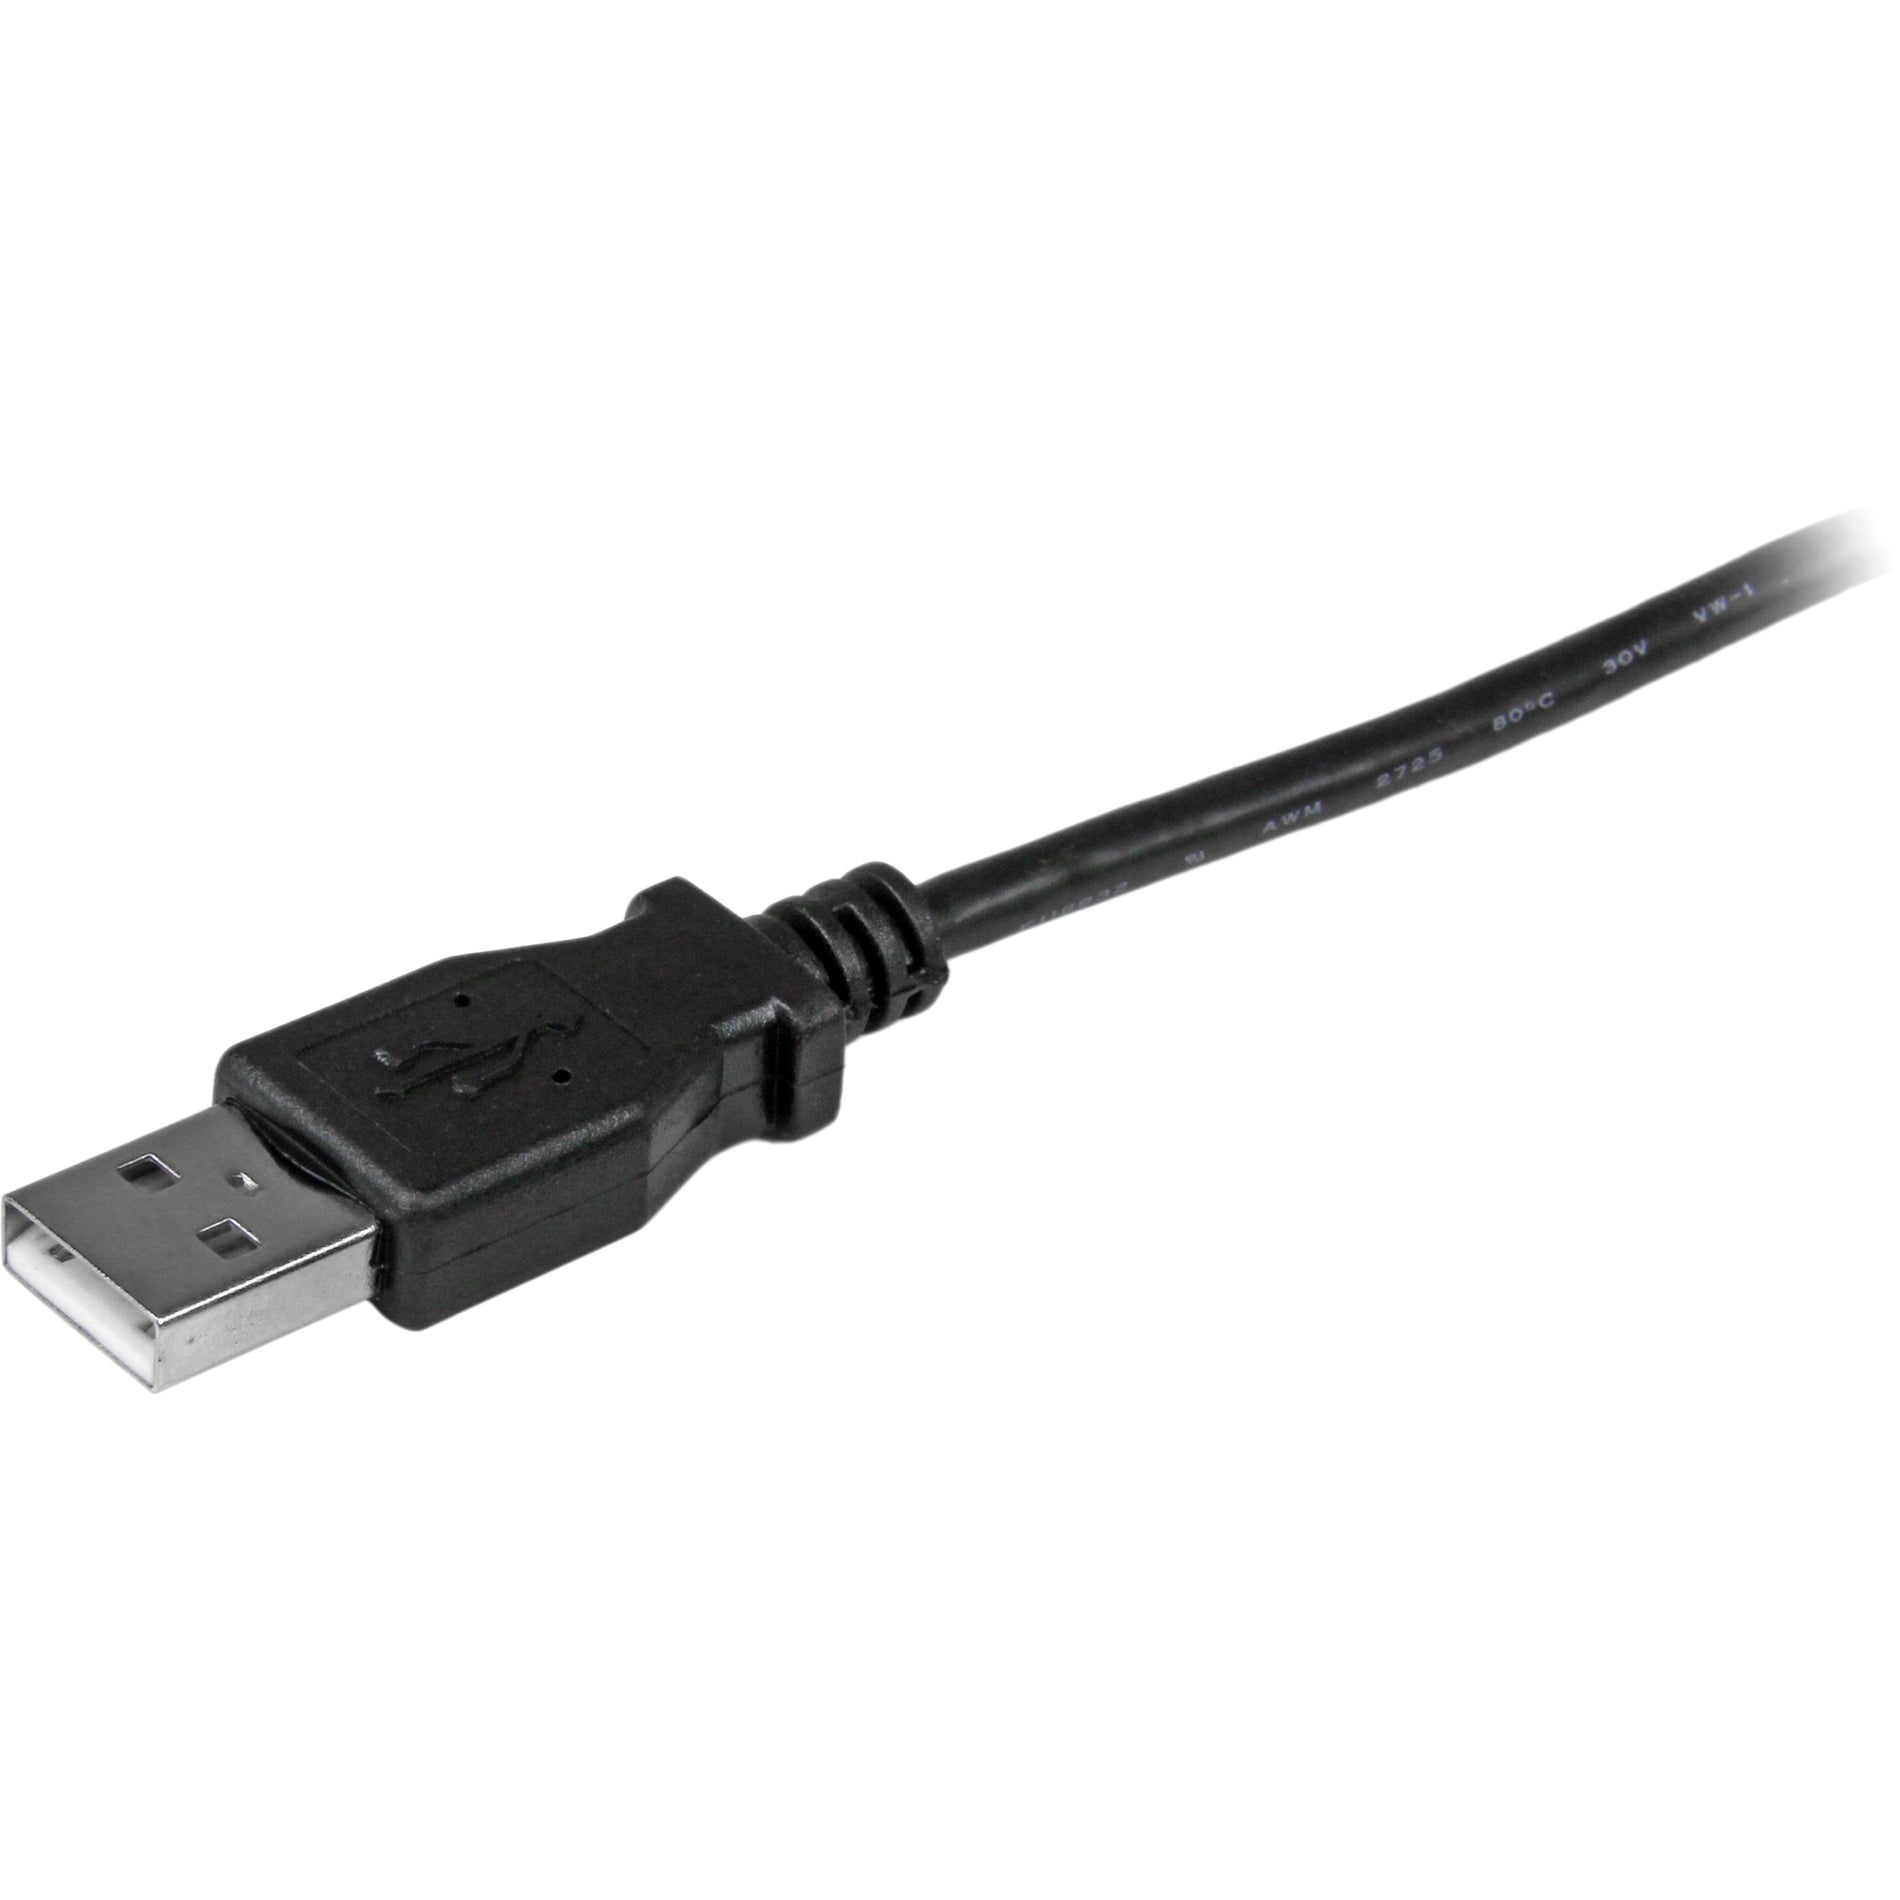 StarTech.com UUSBHAUB6 マイクロUSBケーブル、6ft データ転送ケーブル、銅導体、USB 2.0 タイプA - オス to マイクロUSB 2.0 タイプB - オス、ブラック ブランド名：スターテック・ドットコム